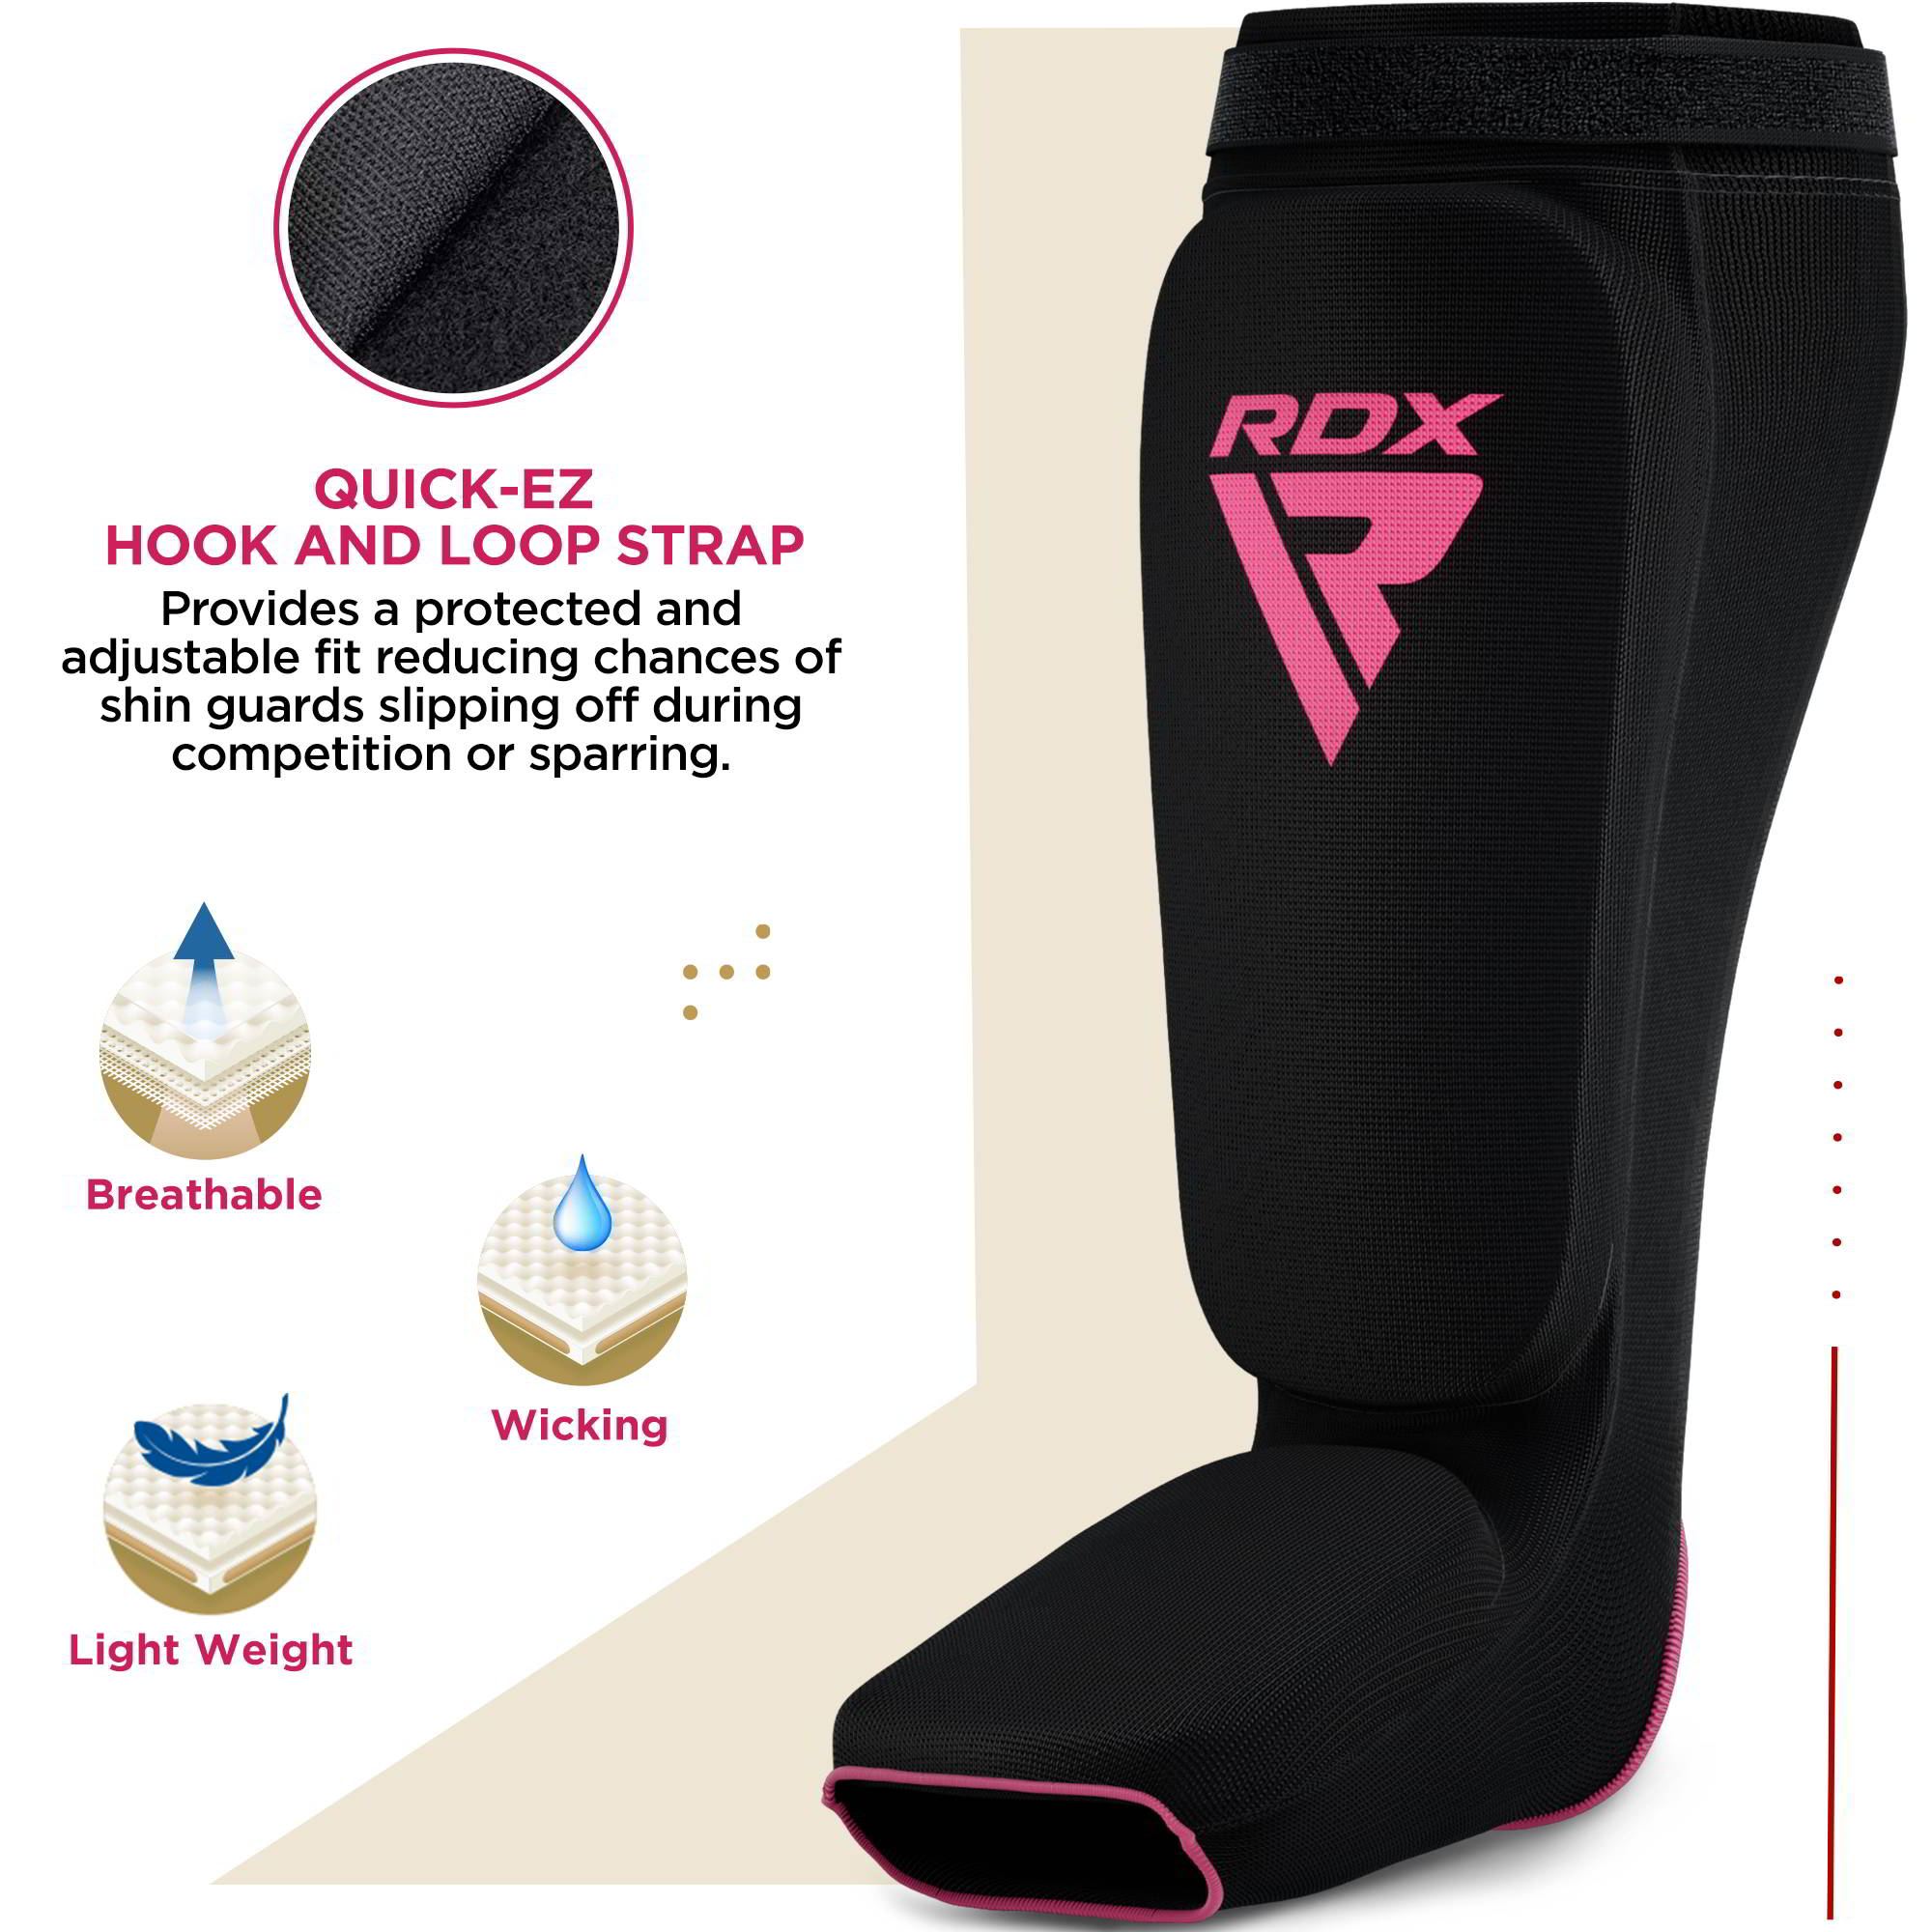 RDX SIB Shin Instep Guard OEKO-TEX® Standard 100 certified#color_pink